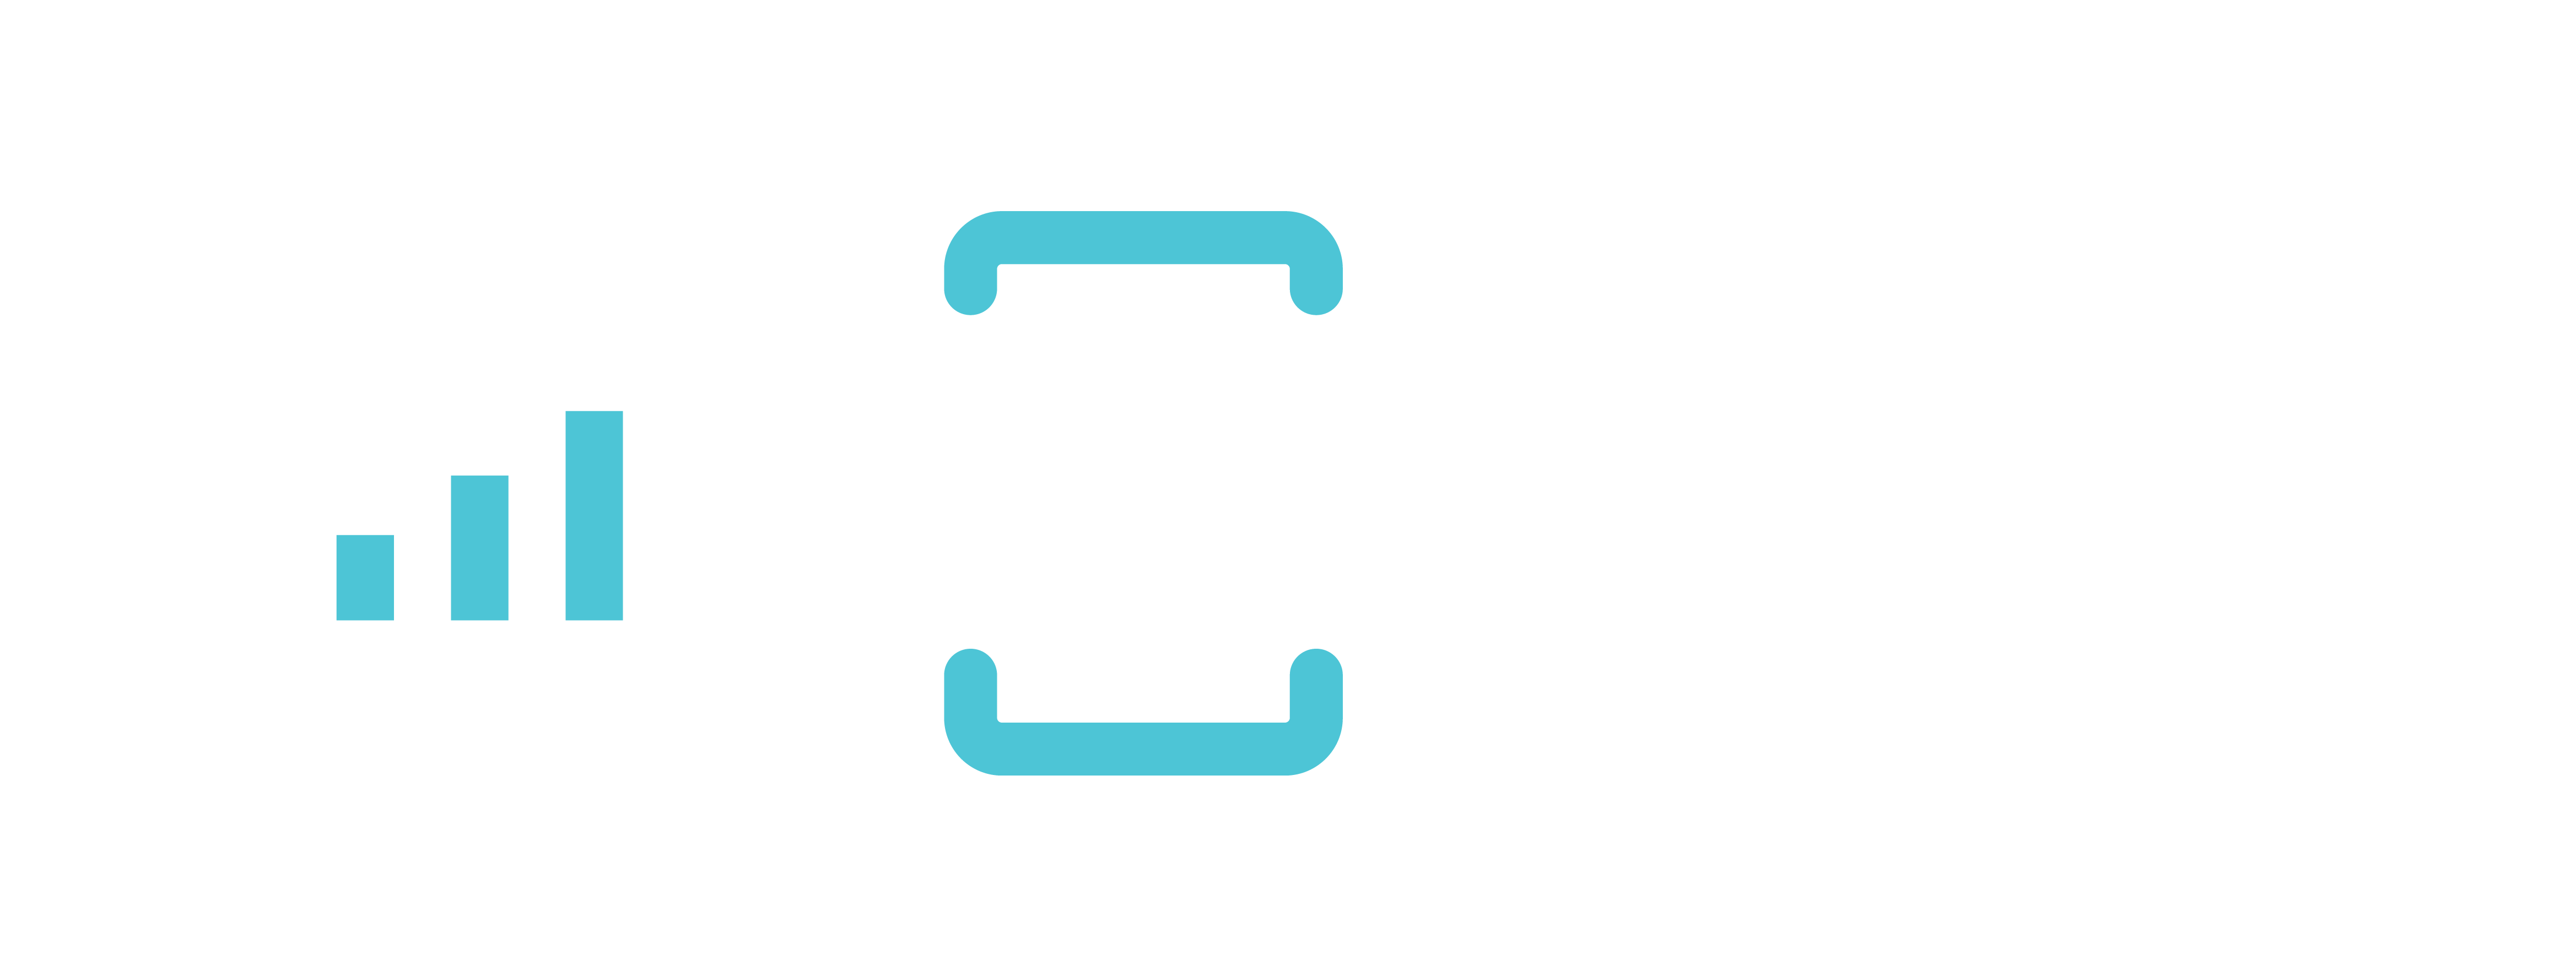 DigiBlue glasses